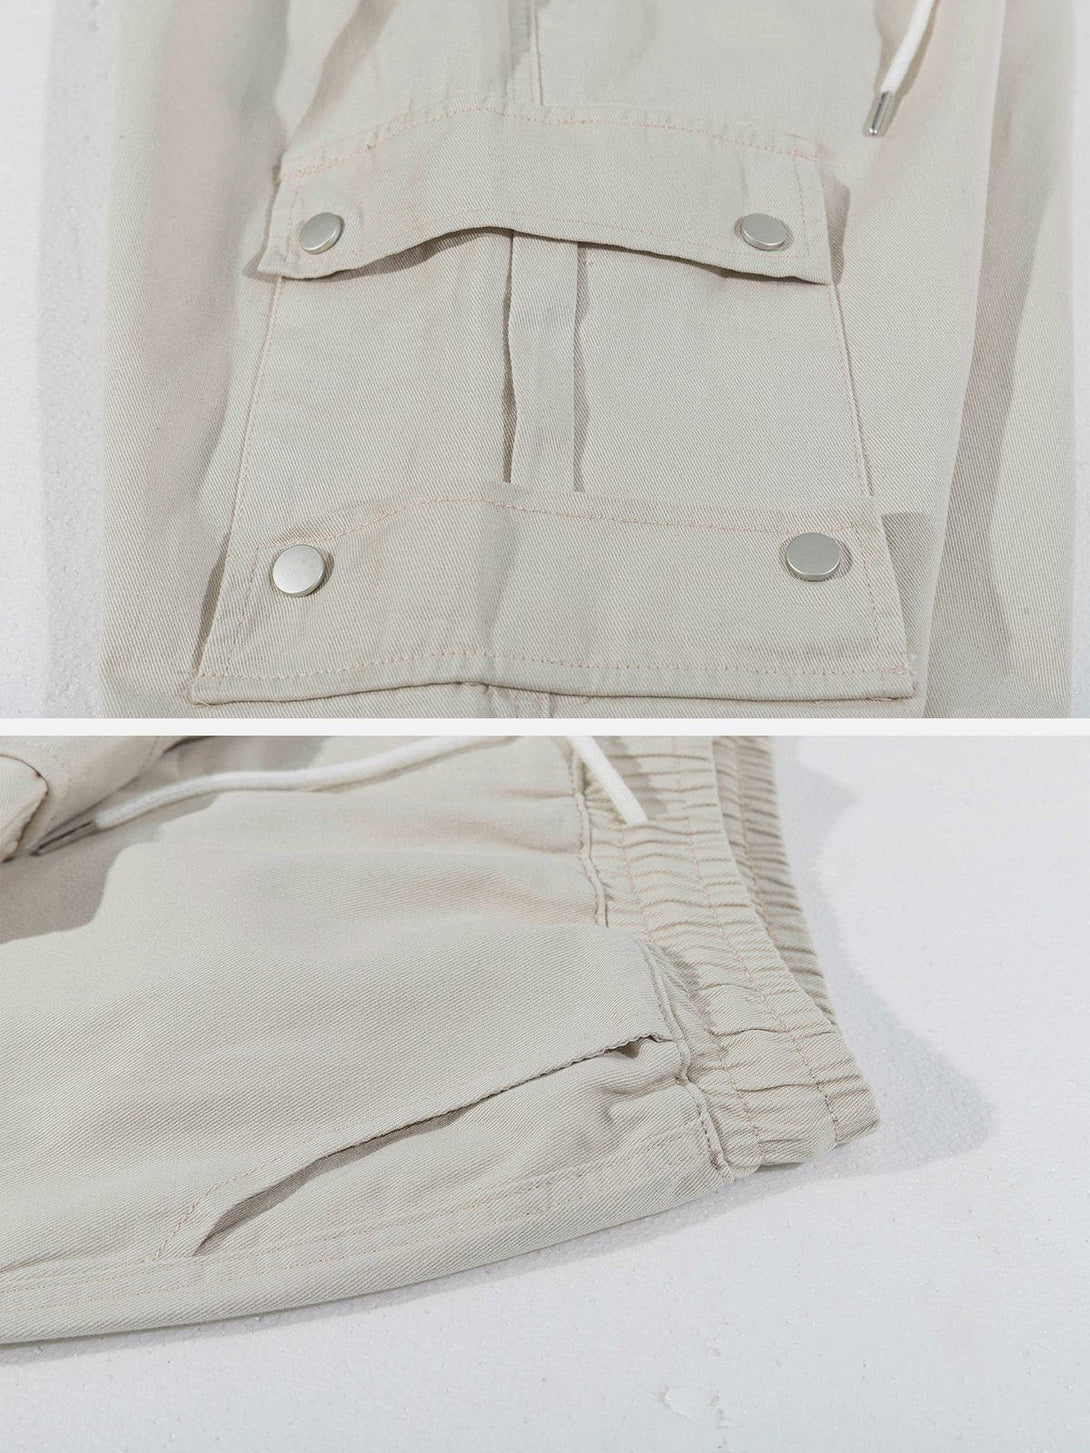 Majesda® - Discreet Side Pockets Shorts outfit ideas streetwear fashion